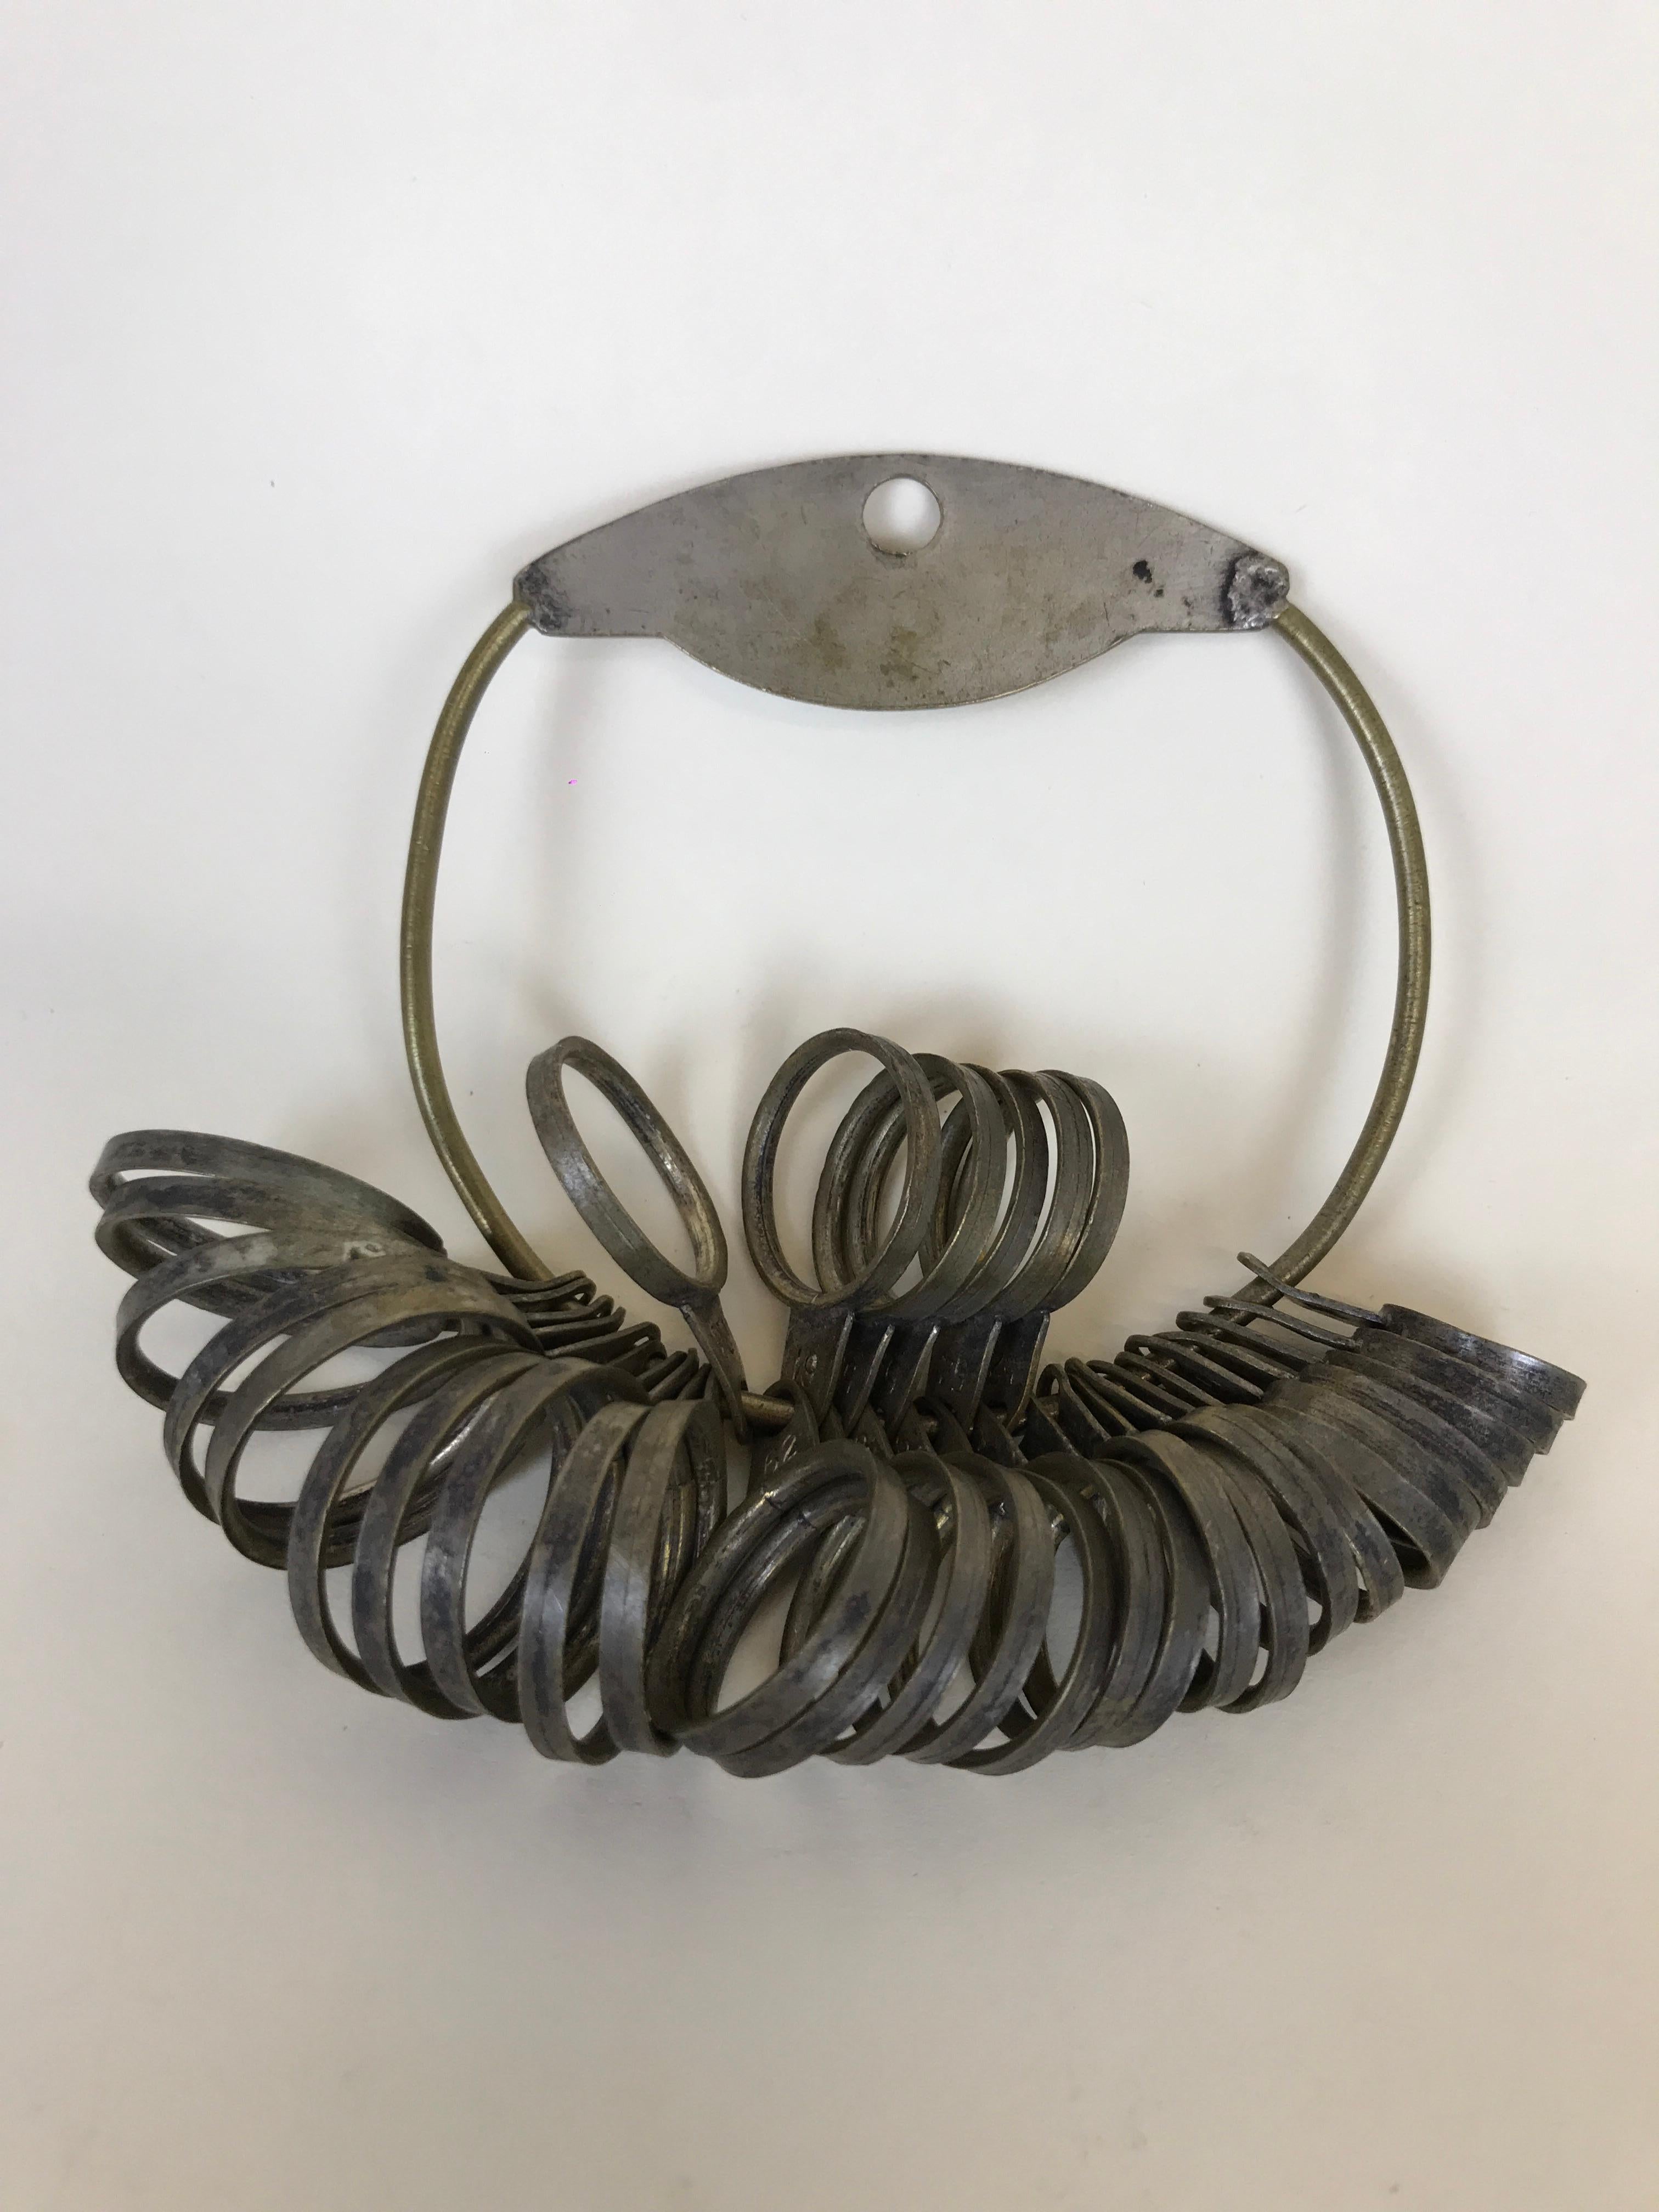 1940s Italian Vintage Industrial Ring Sizer in Metal For Sale 1